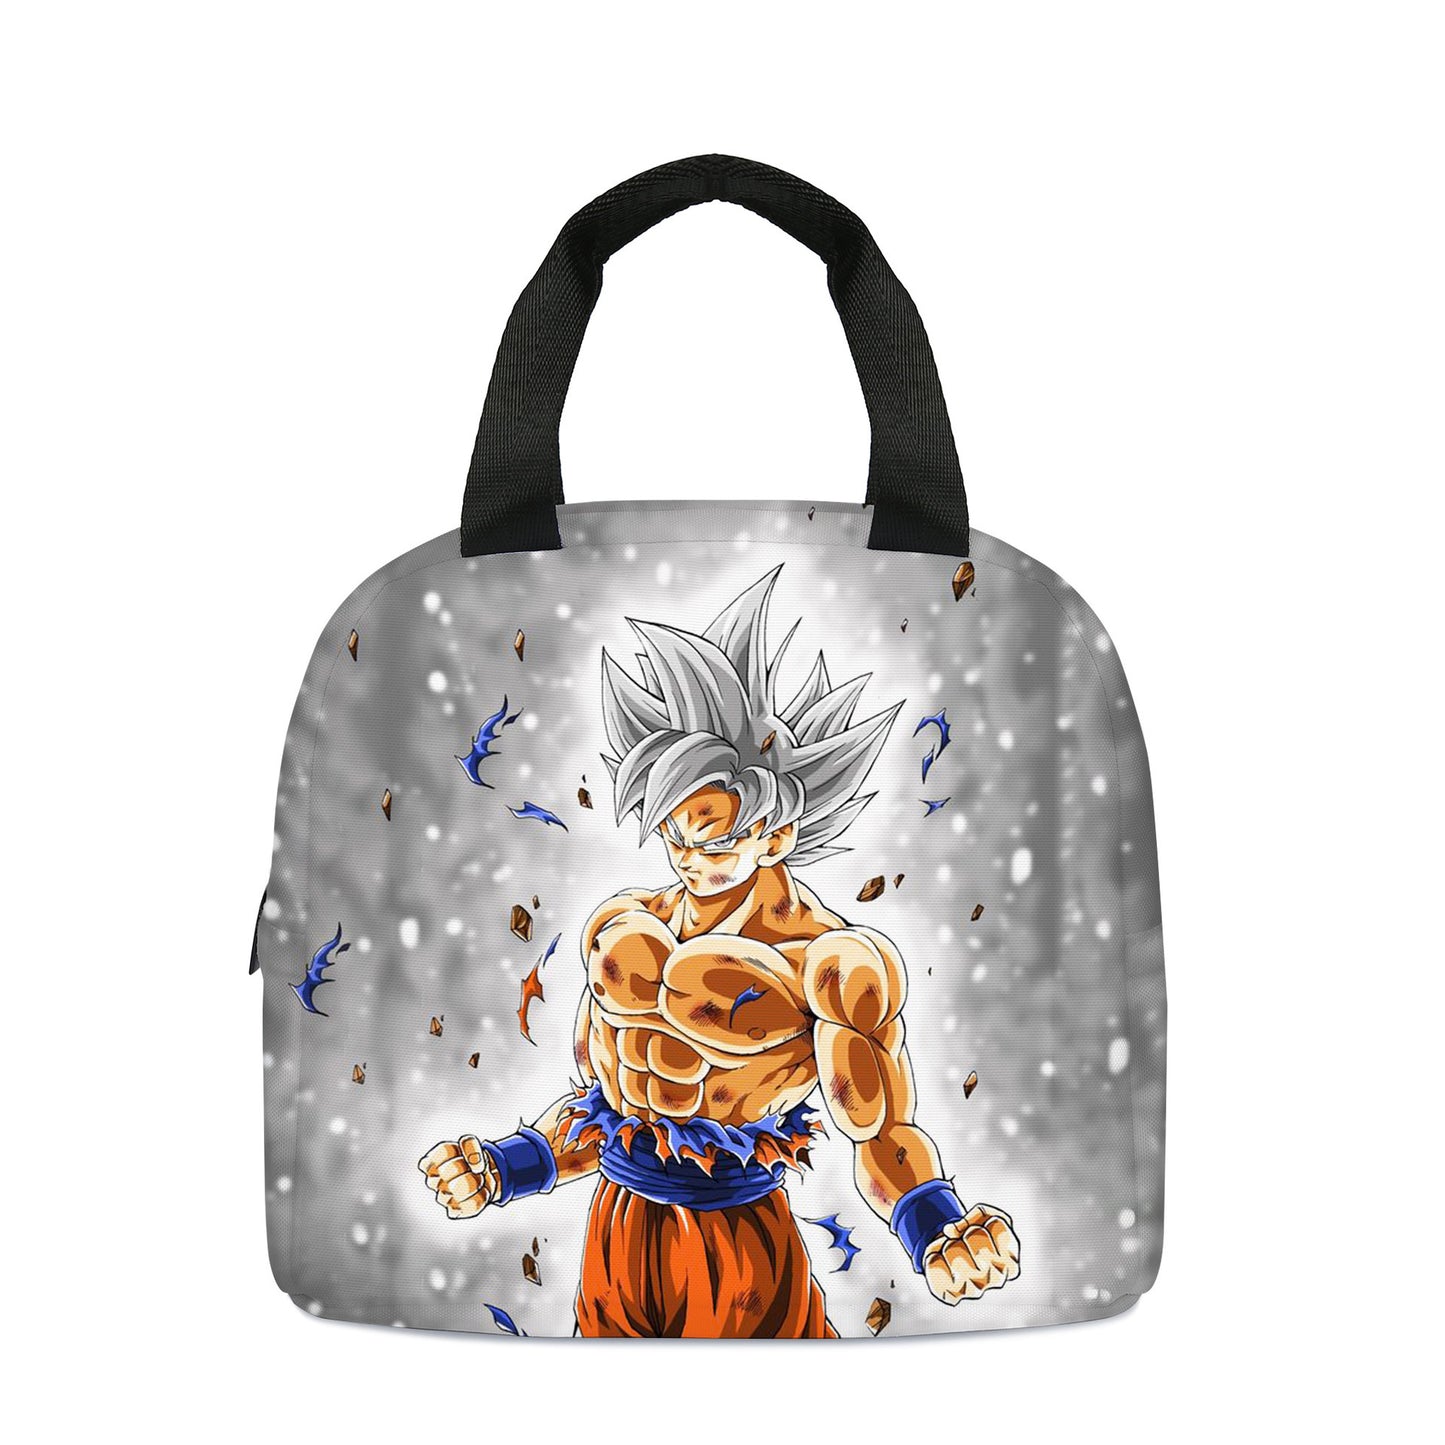 Dragon Ball Children's Lunch Box Thermal Bag